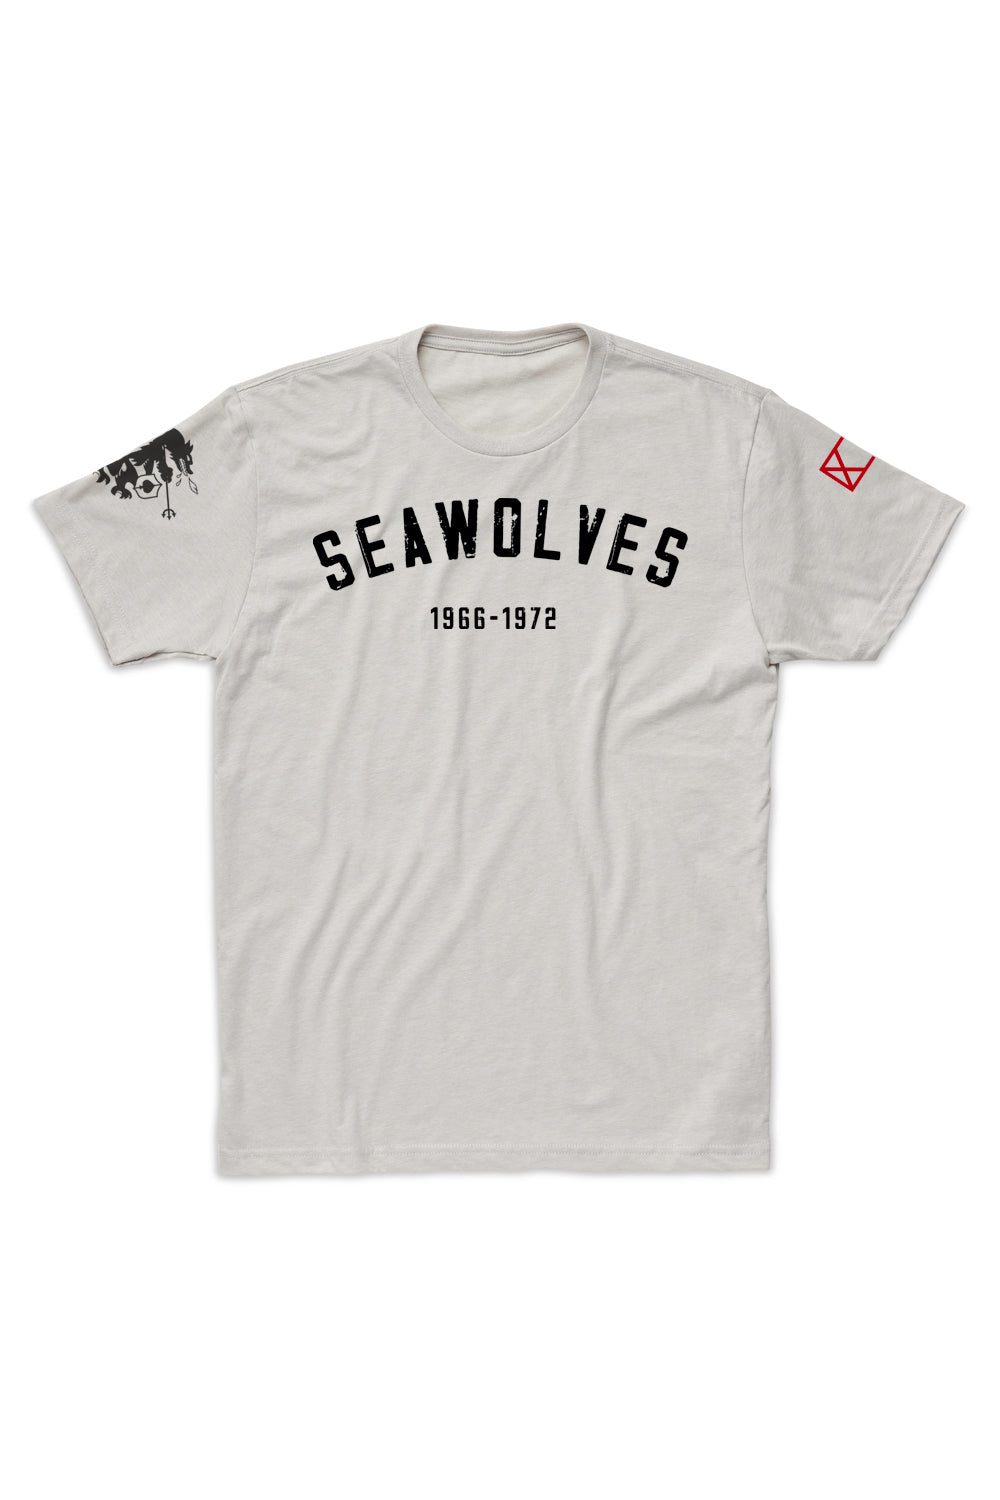 Seawolves - July '21: